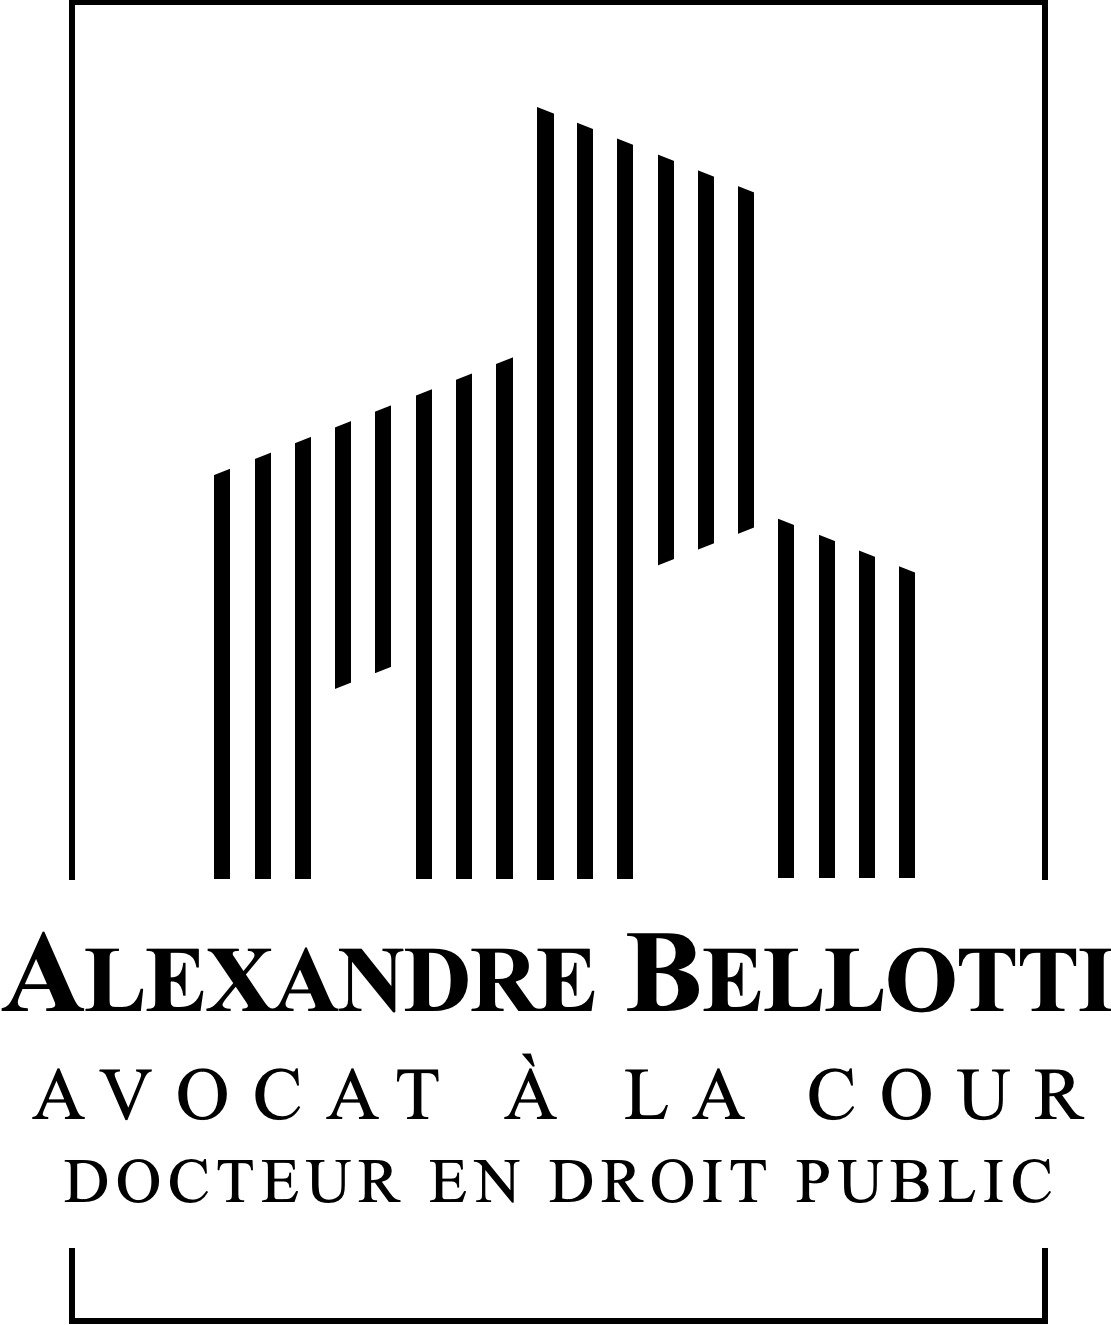 Alexandre Bellotti - Avocat au barreau de Montpellier